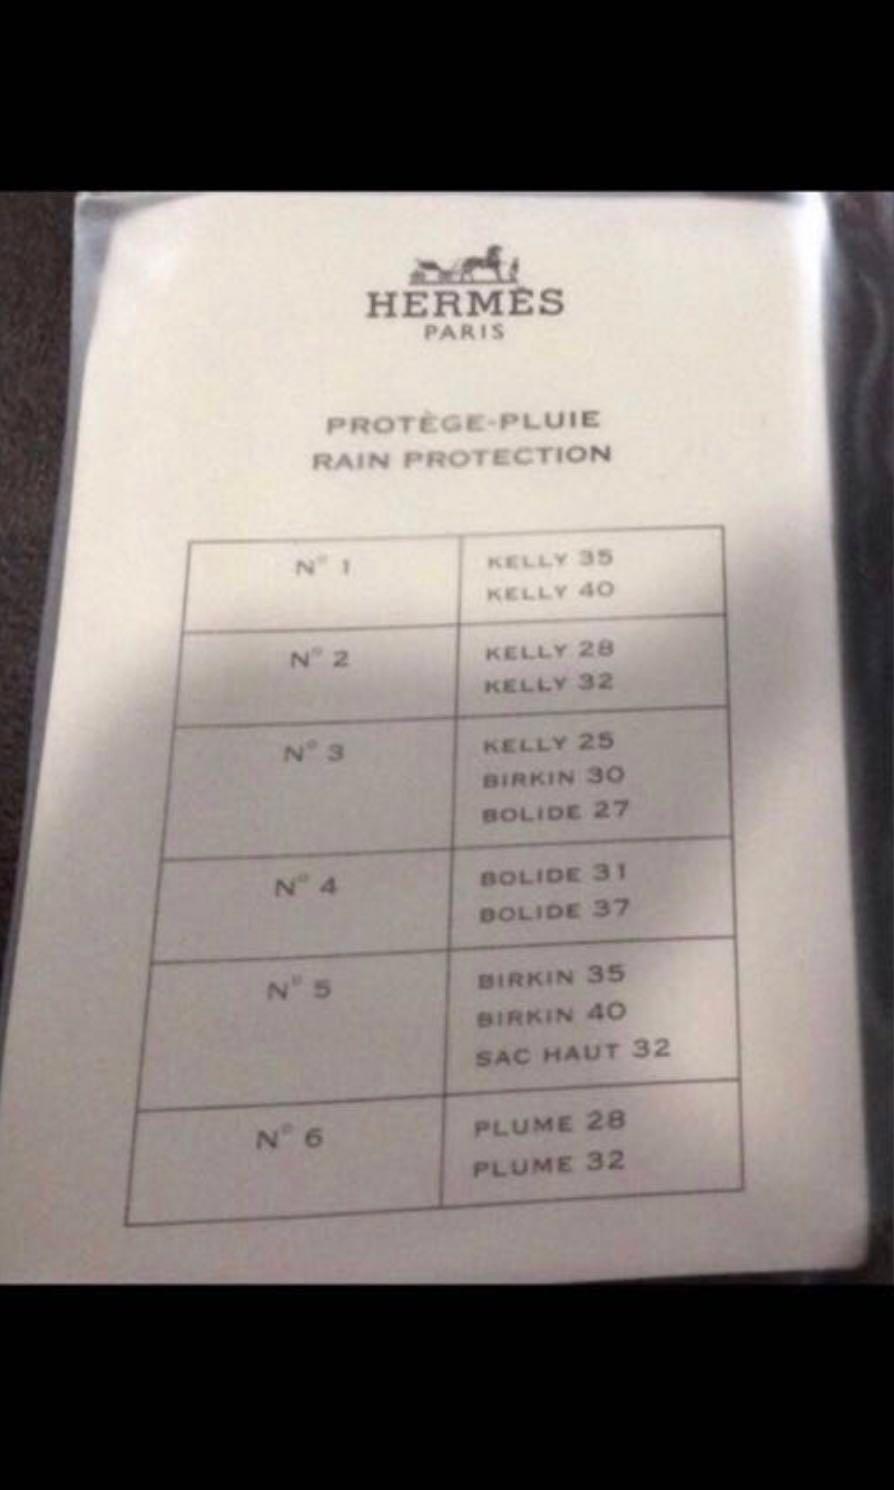 Hermes Raincoat Rain Coat Protector #3 for Kelly 25, Birkin 30 and Bolide  27, Ne